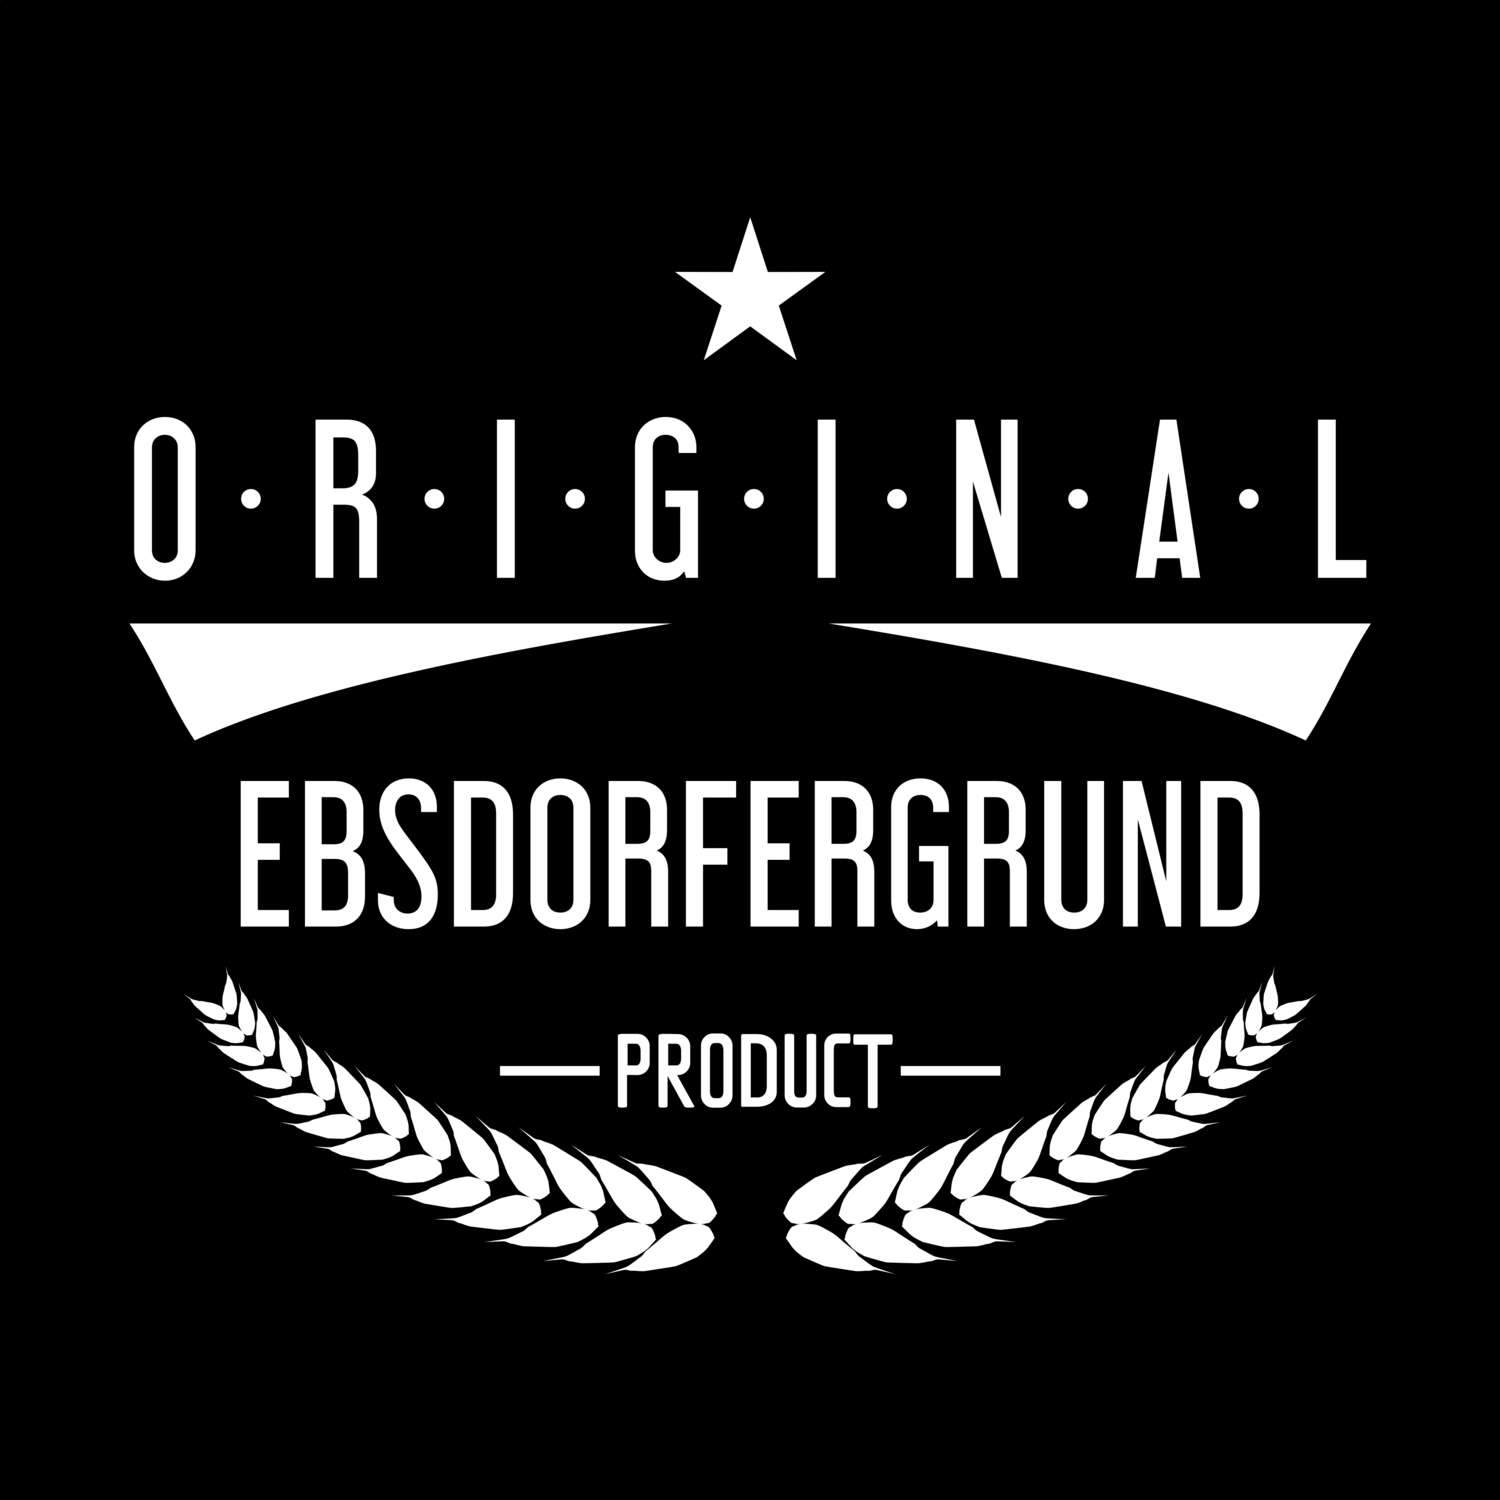 Ebsdorfergrund T-Shirt »Original Product«